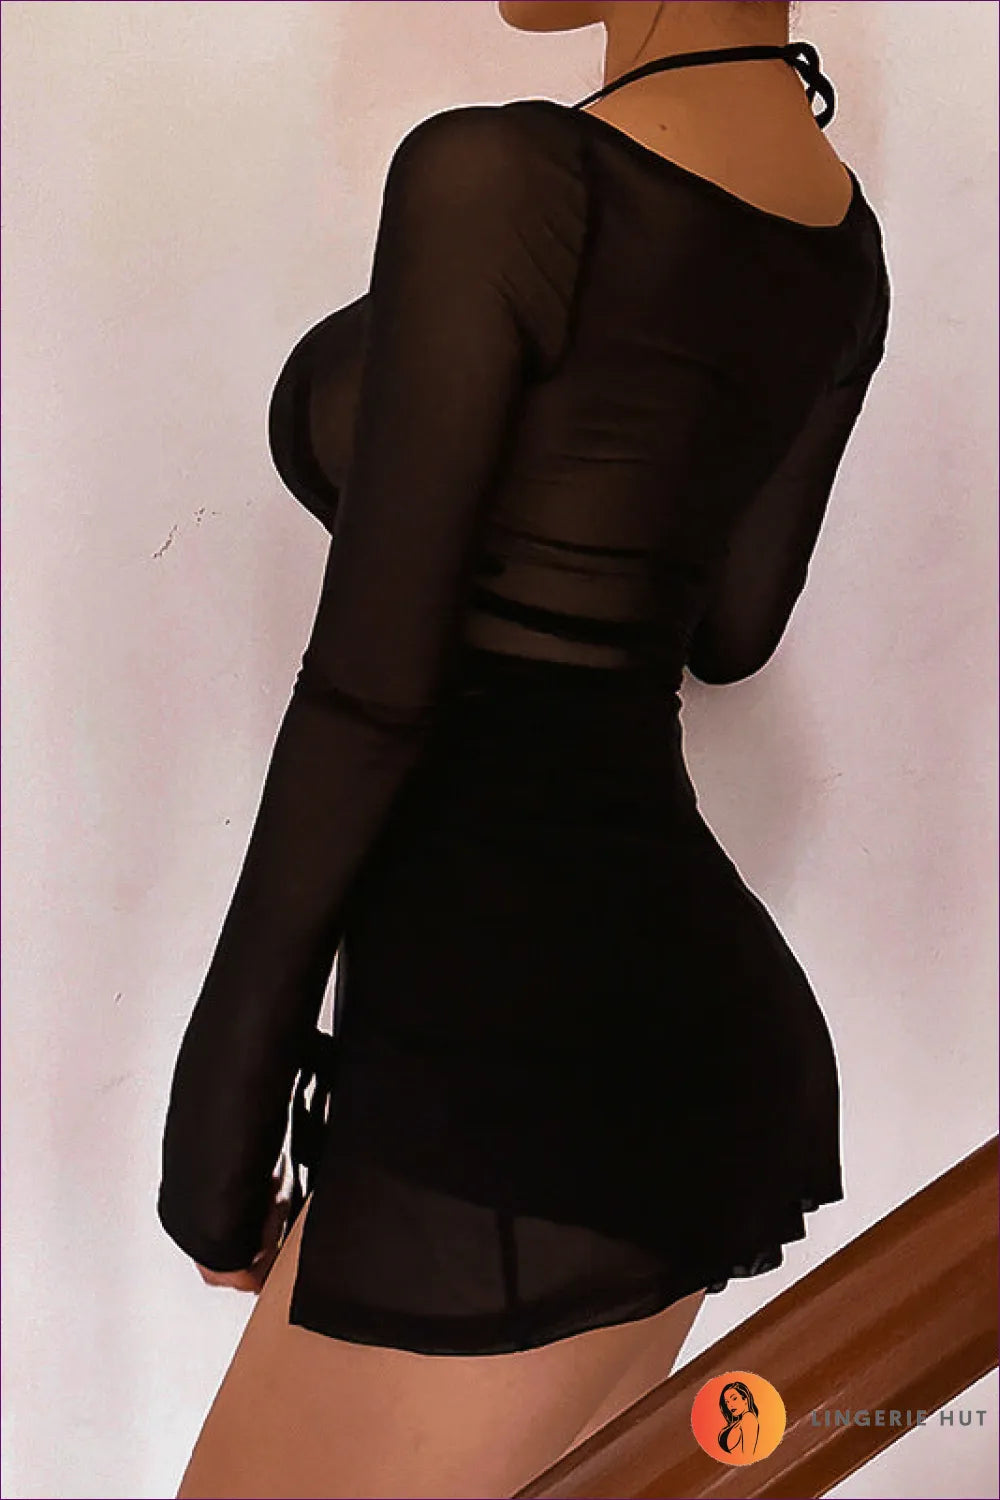 Sassy Black Mesh Mini Dress - Bold And Playful